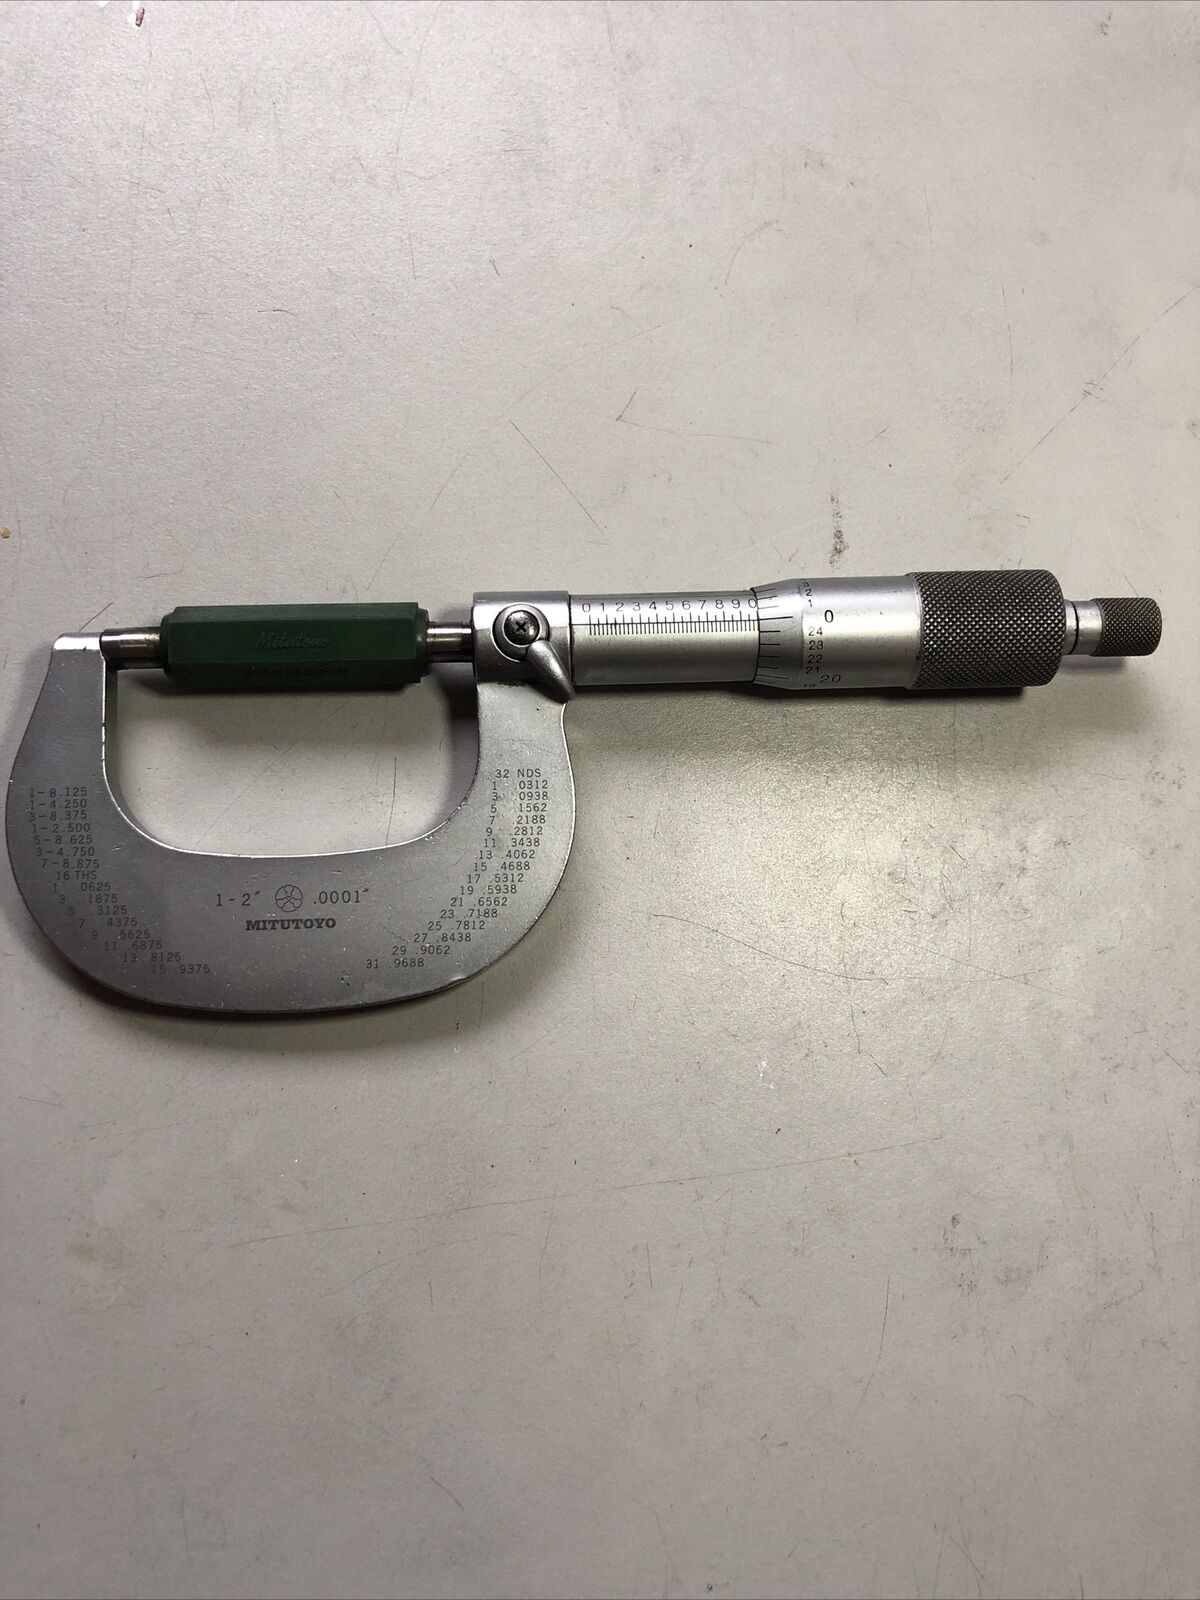 Vintage Mitutoyo Micrometer 1-2” With Standard 